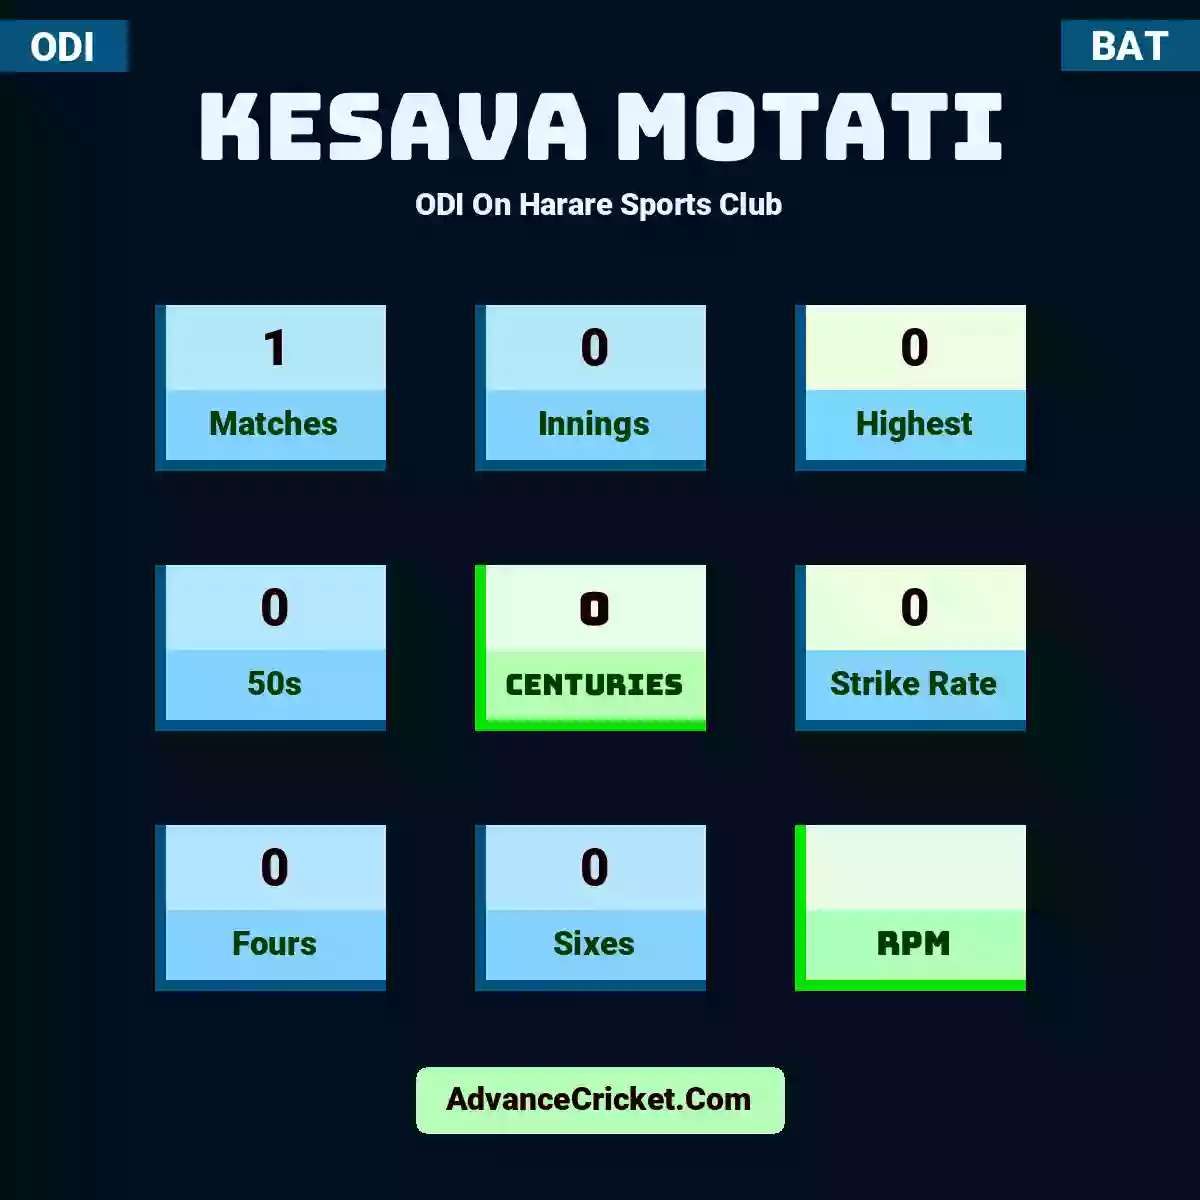 Kesava Motati ODI  On Harare Sports Club, Kesava Motati played 1 matches, scored 0 runs as highest, 0 half-centuries, and 0 centuries, with a strike rate of 0. K.Motati hit 0 fours and 0 sixes.